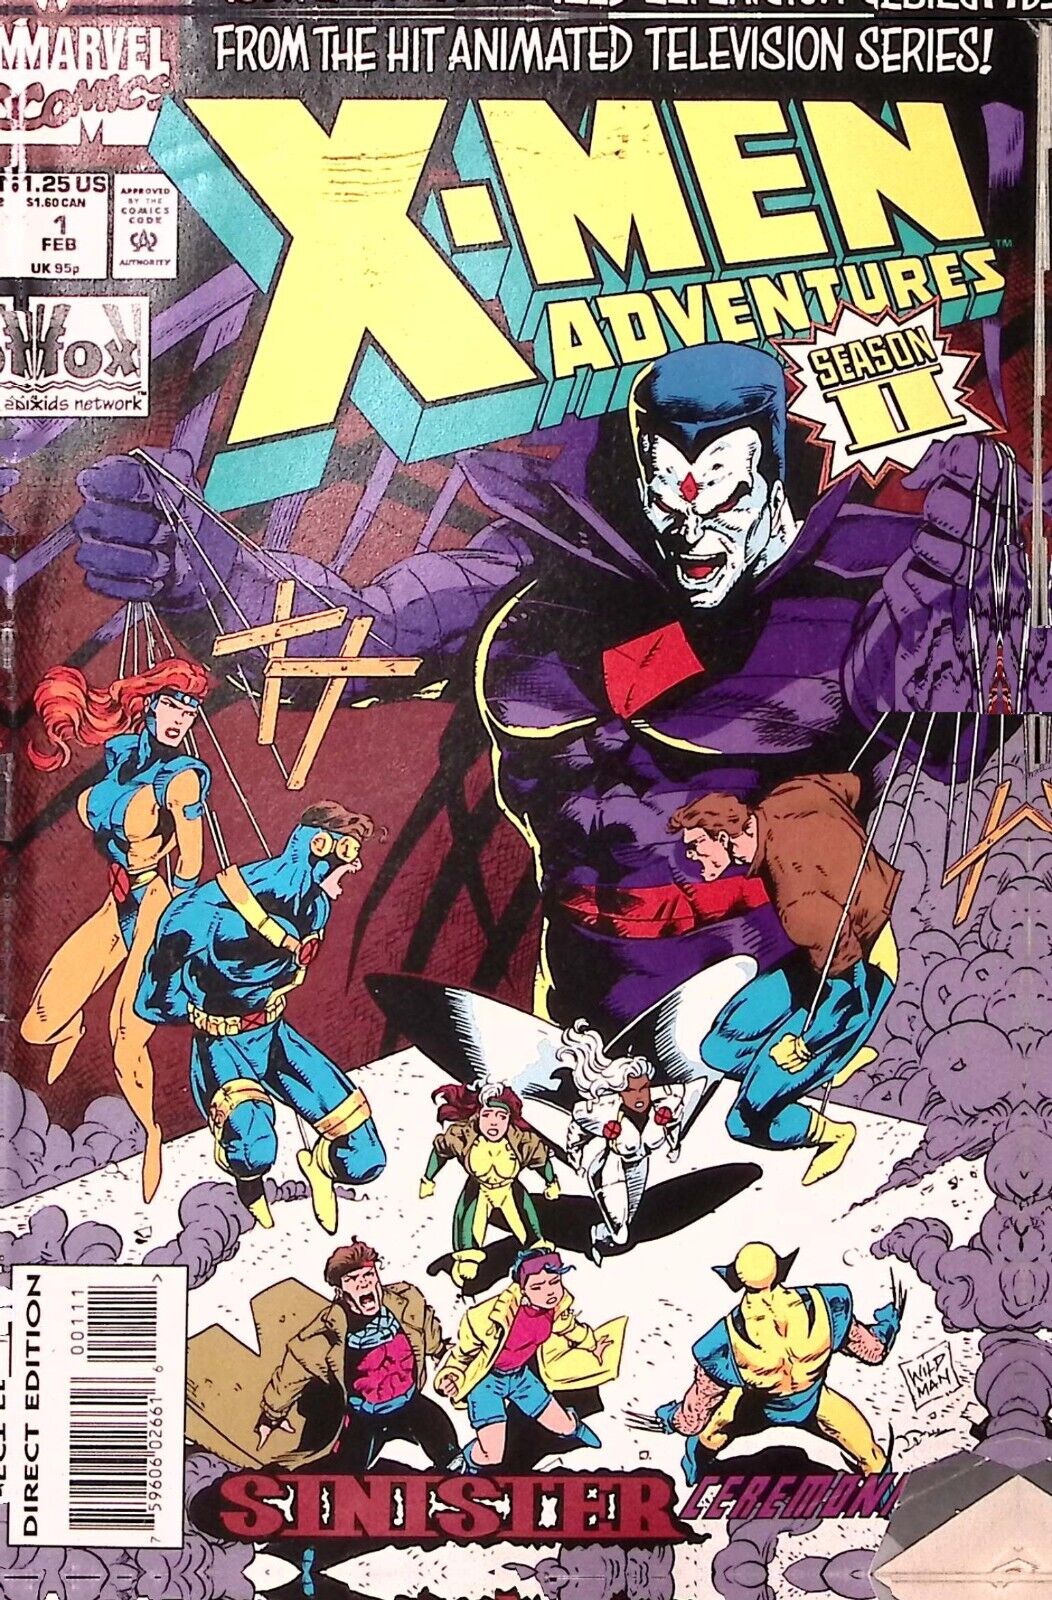 1994 X-MEN ADVENTURES II #1 FEB SINISTER CEREMONI MARVEL COMICS Z2197